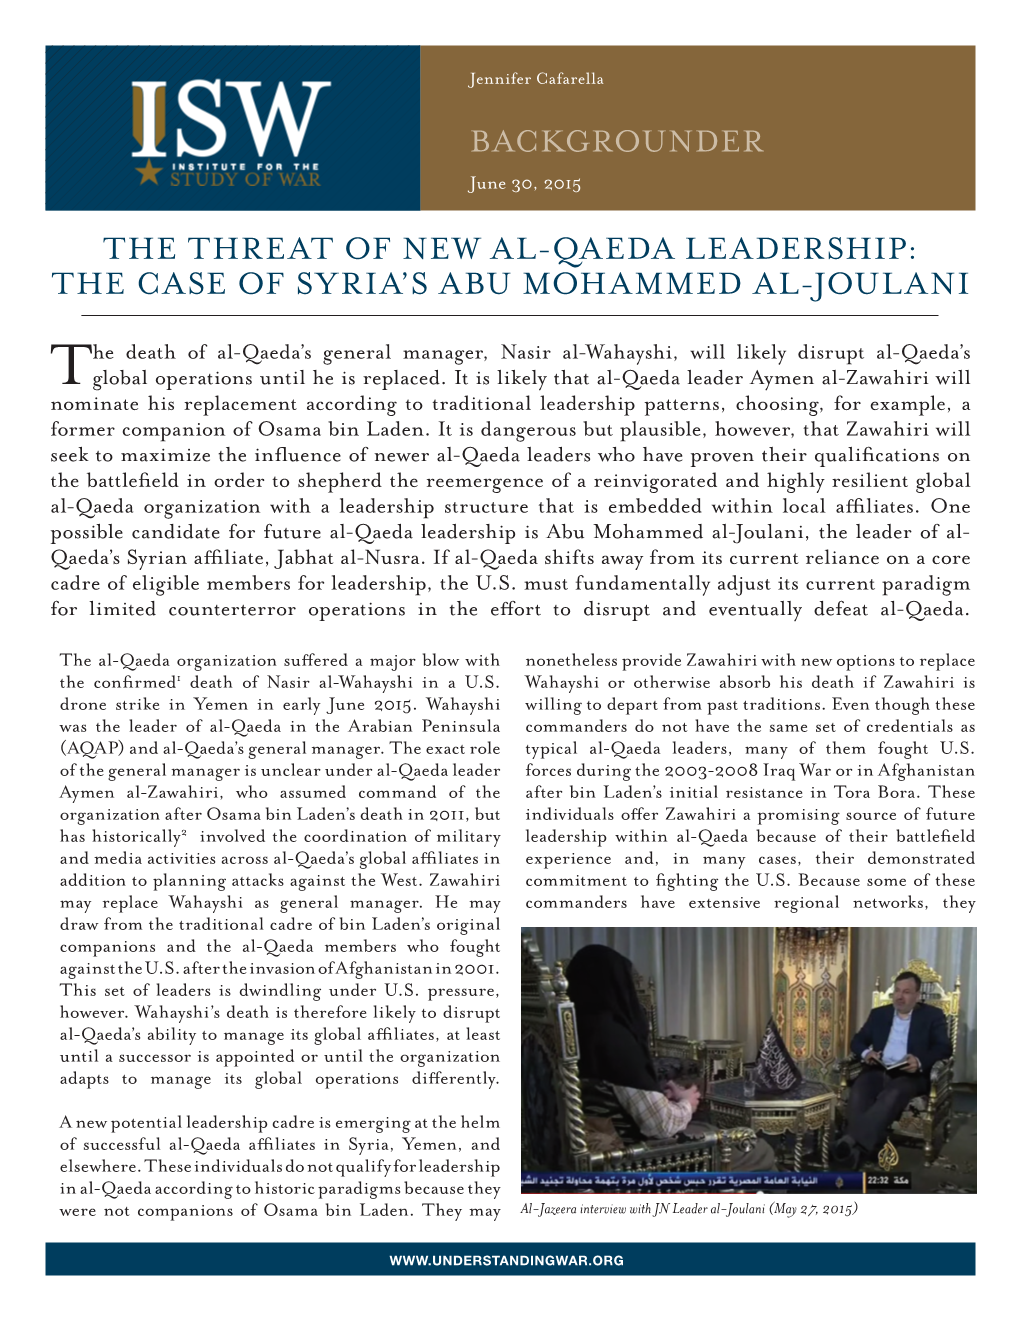 The Threat of New Al-Qaeda Leadership: the Case of Syria’S Abu Mohammed Al-Joulani